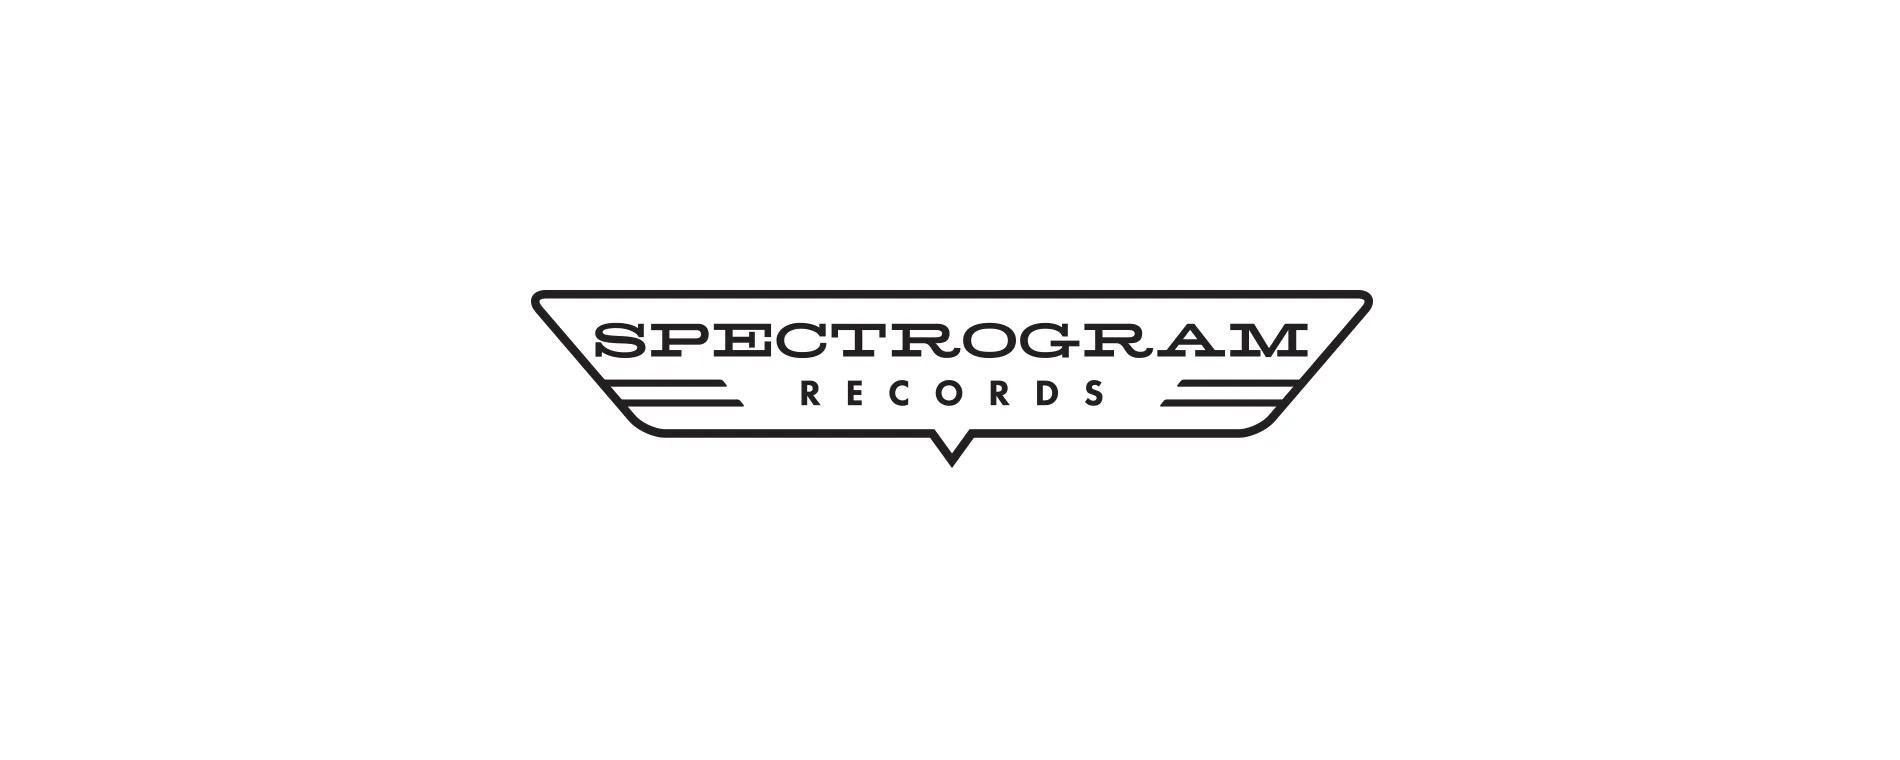 Spectrogram records logo